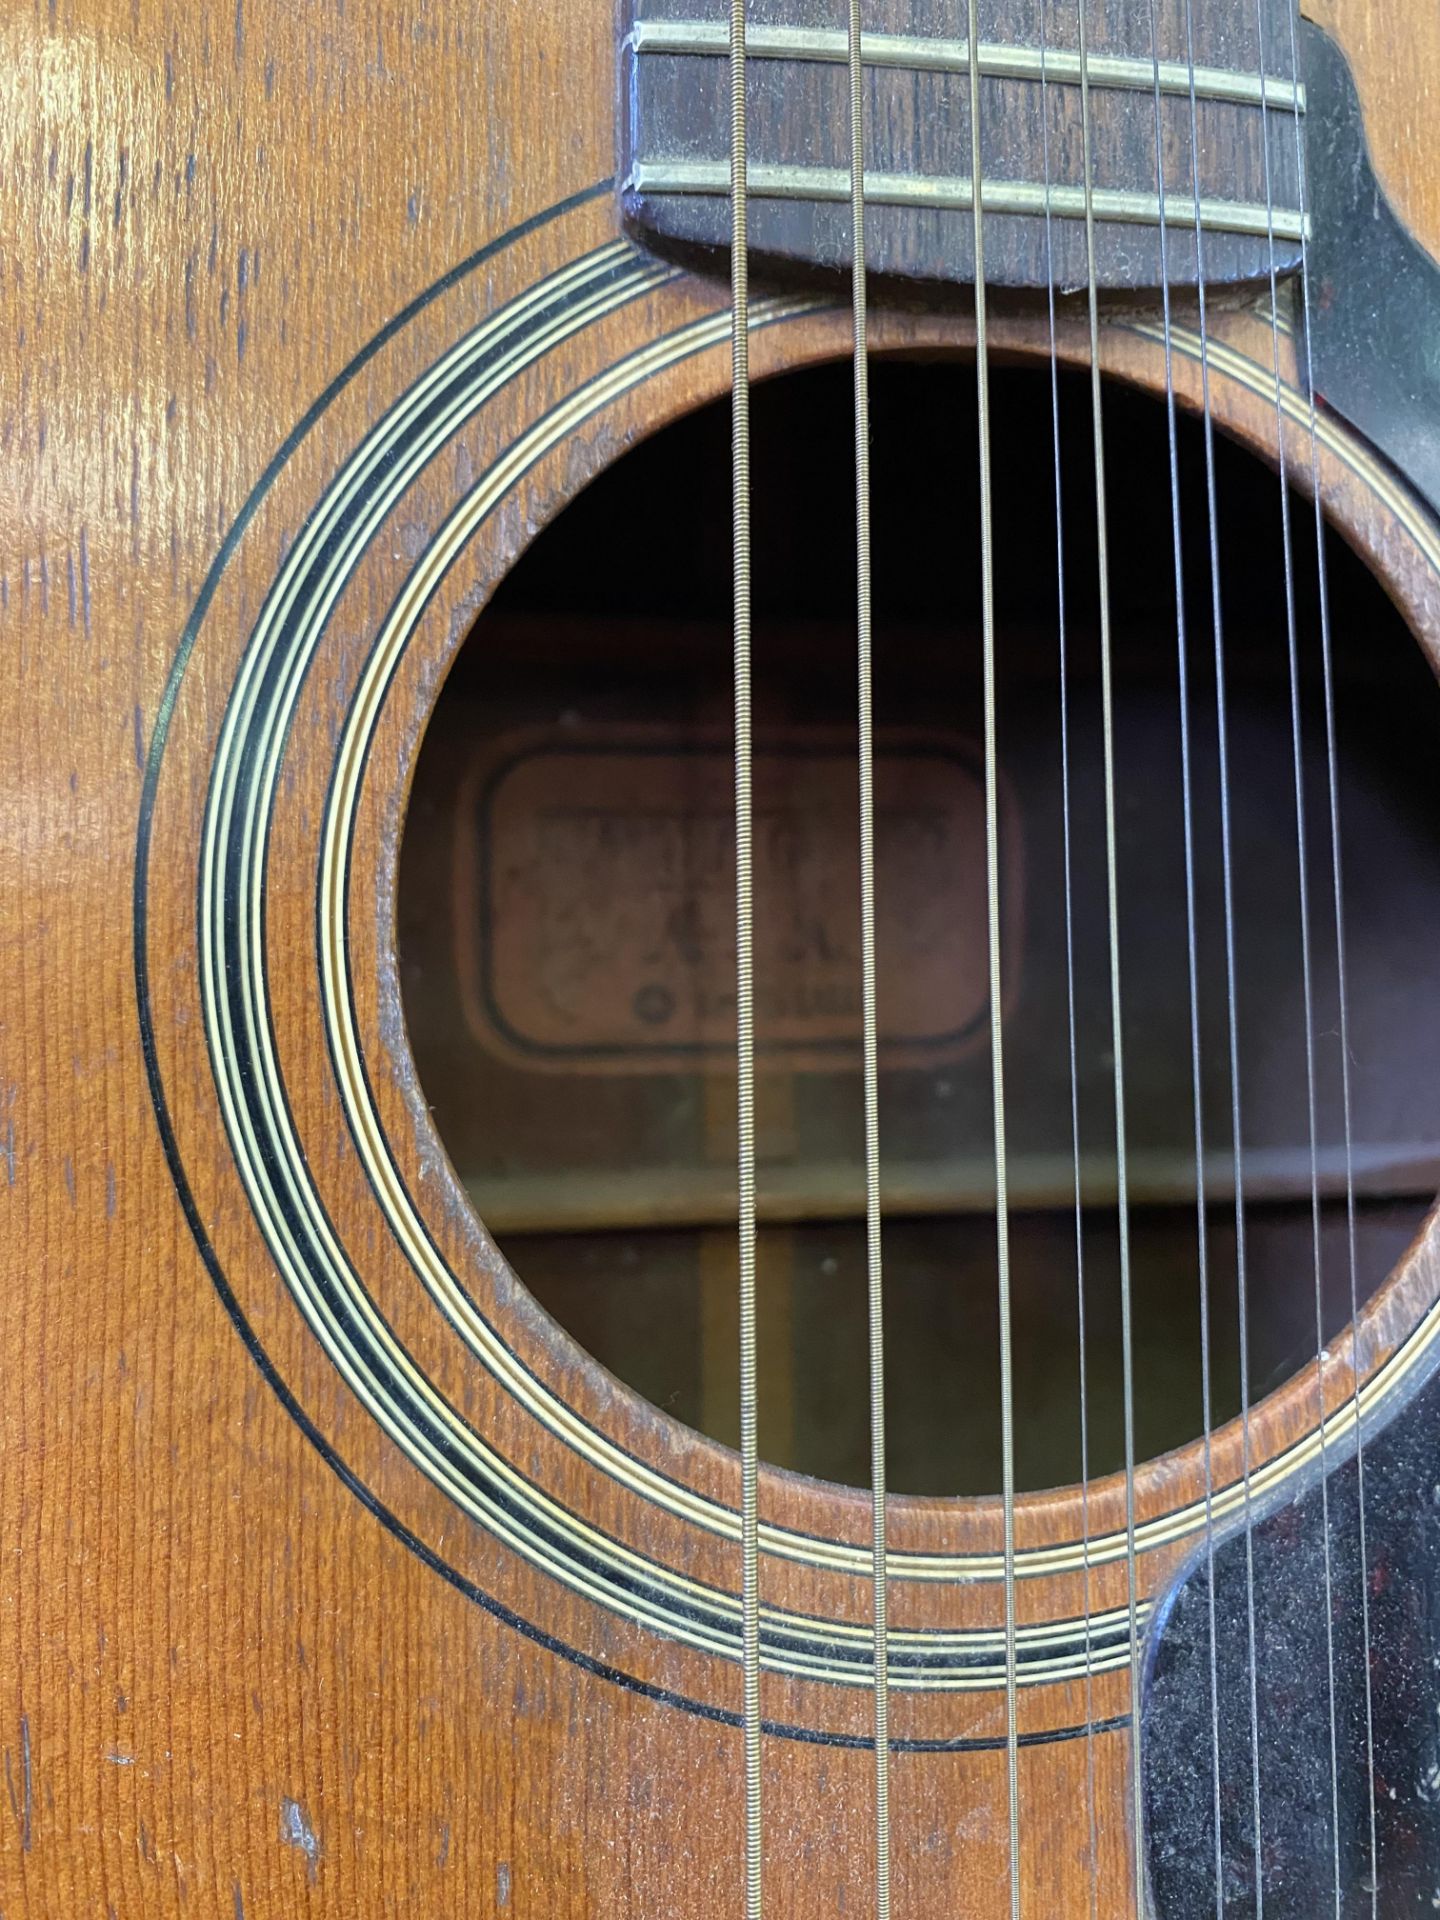 Yamaha 12 string acoustic guitar - Image 4 of 4